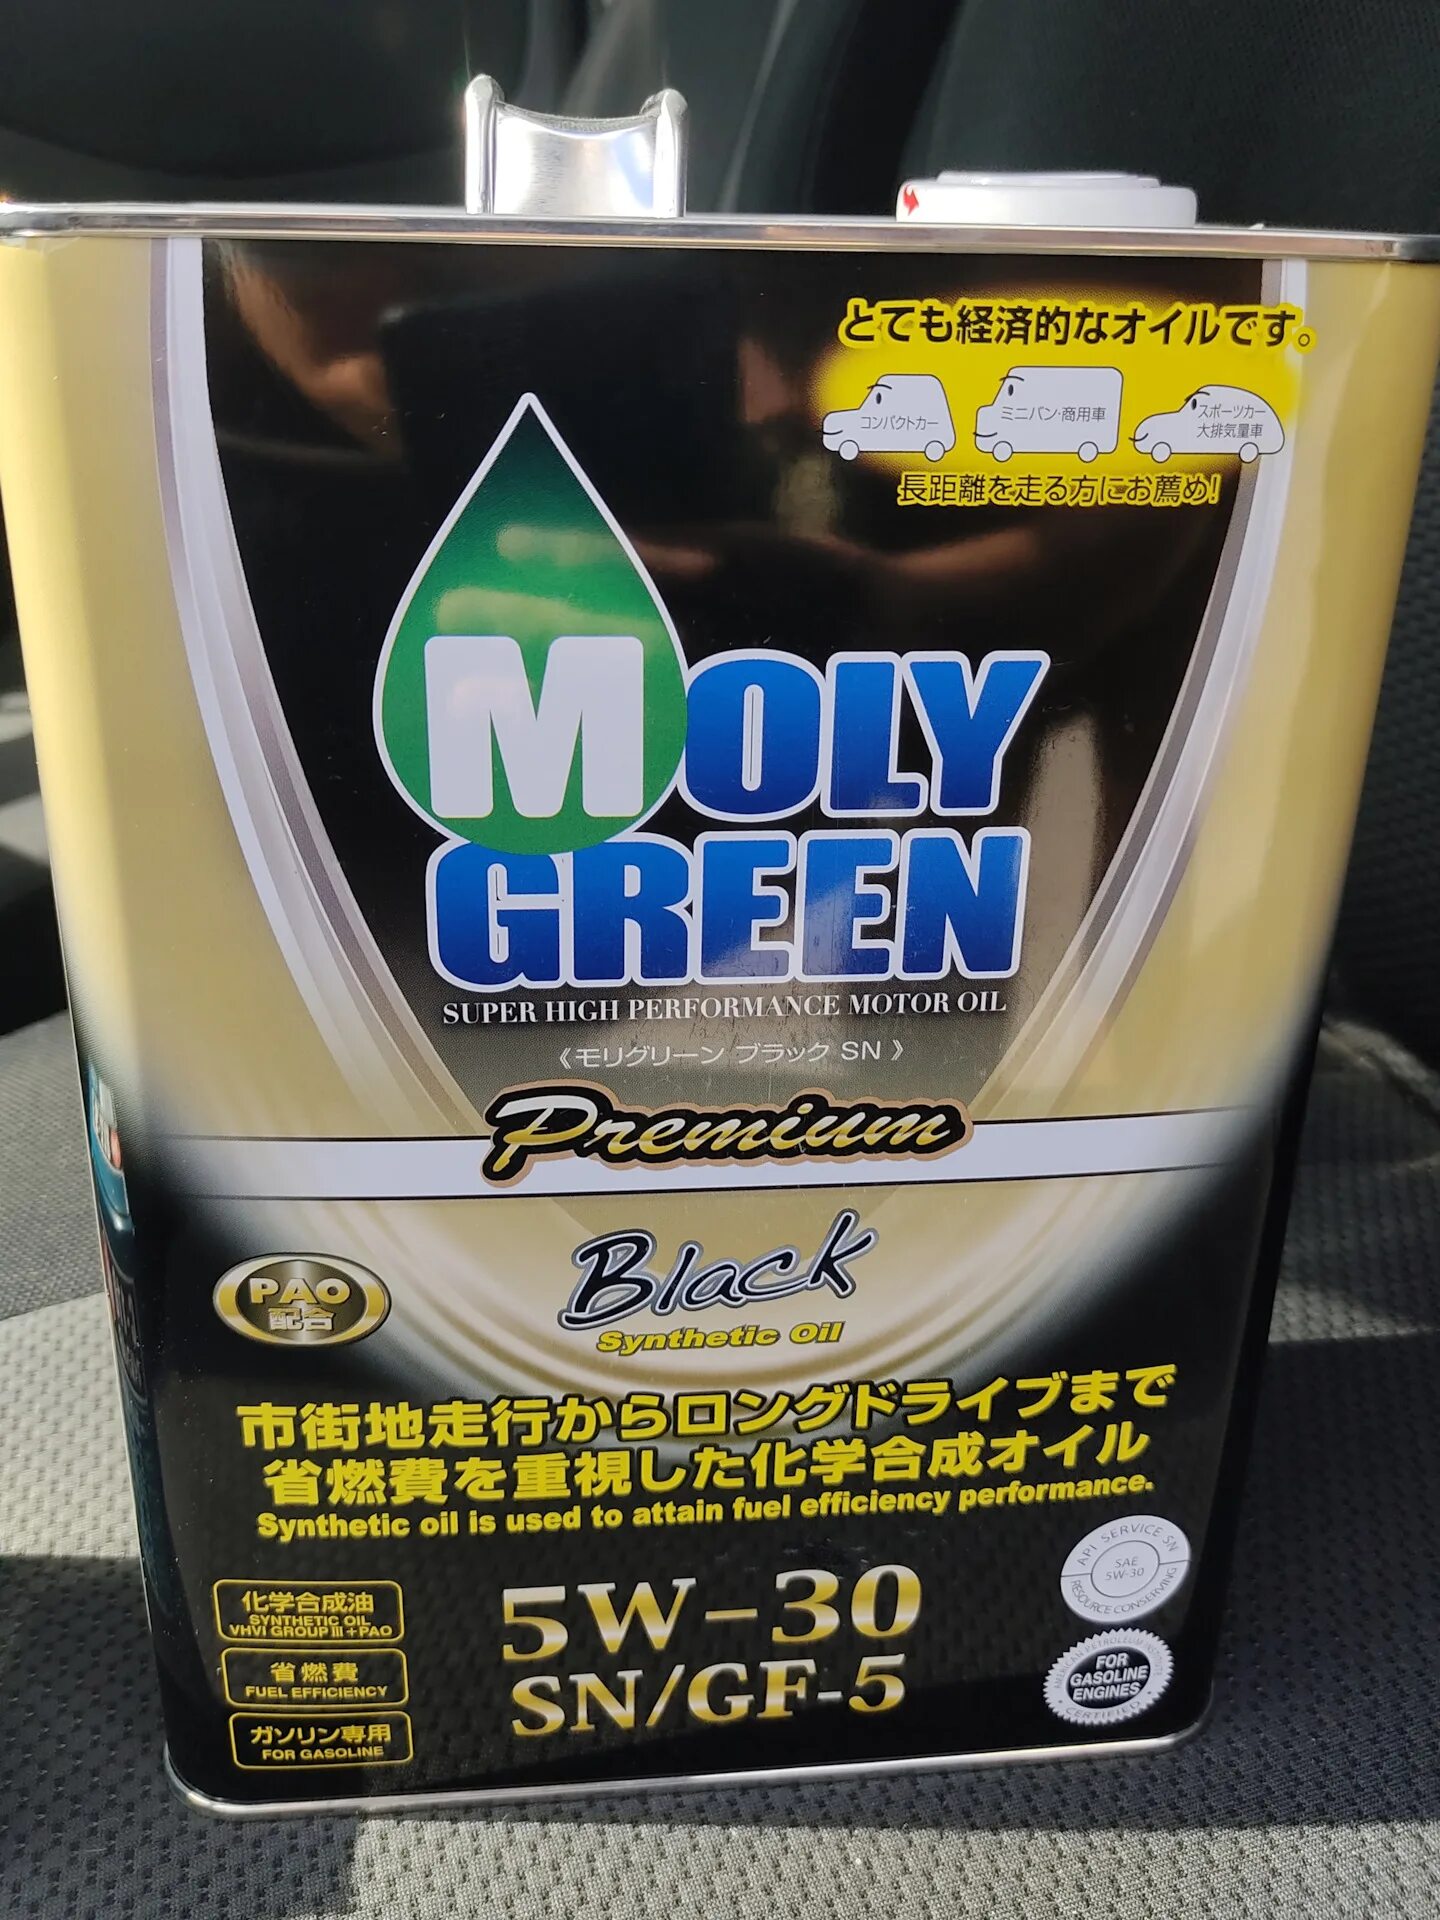 Моторное масло Moly Green 5w30. Moly Green 5w30 Premium. Moly Green 5w30 Premium Black. Моли Грин премиум 5 30. Отзыв масло moly green